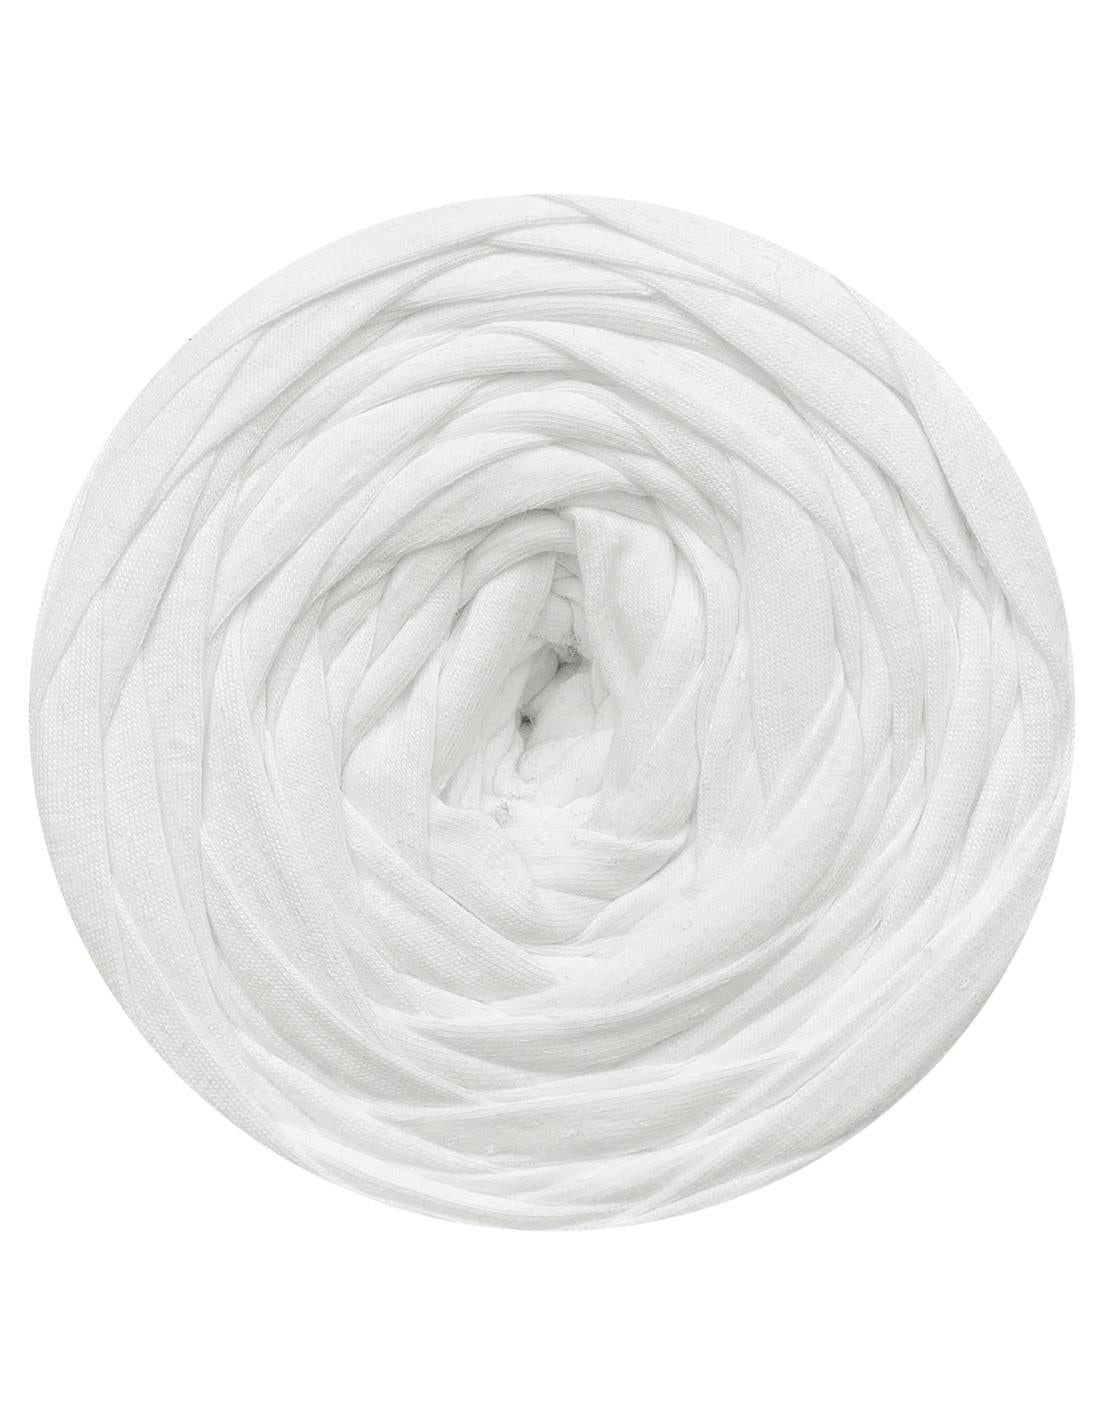 White t-shirt yarn by Hoooked Zpagetti (100-120m)